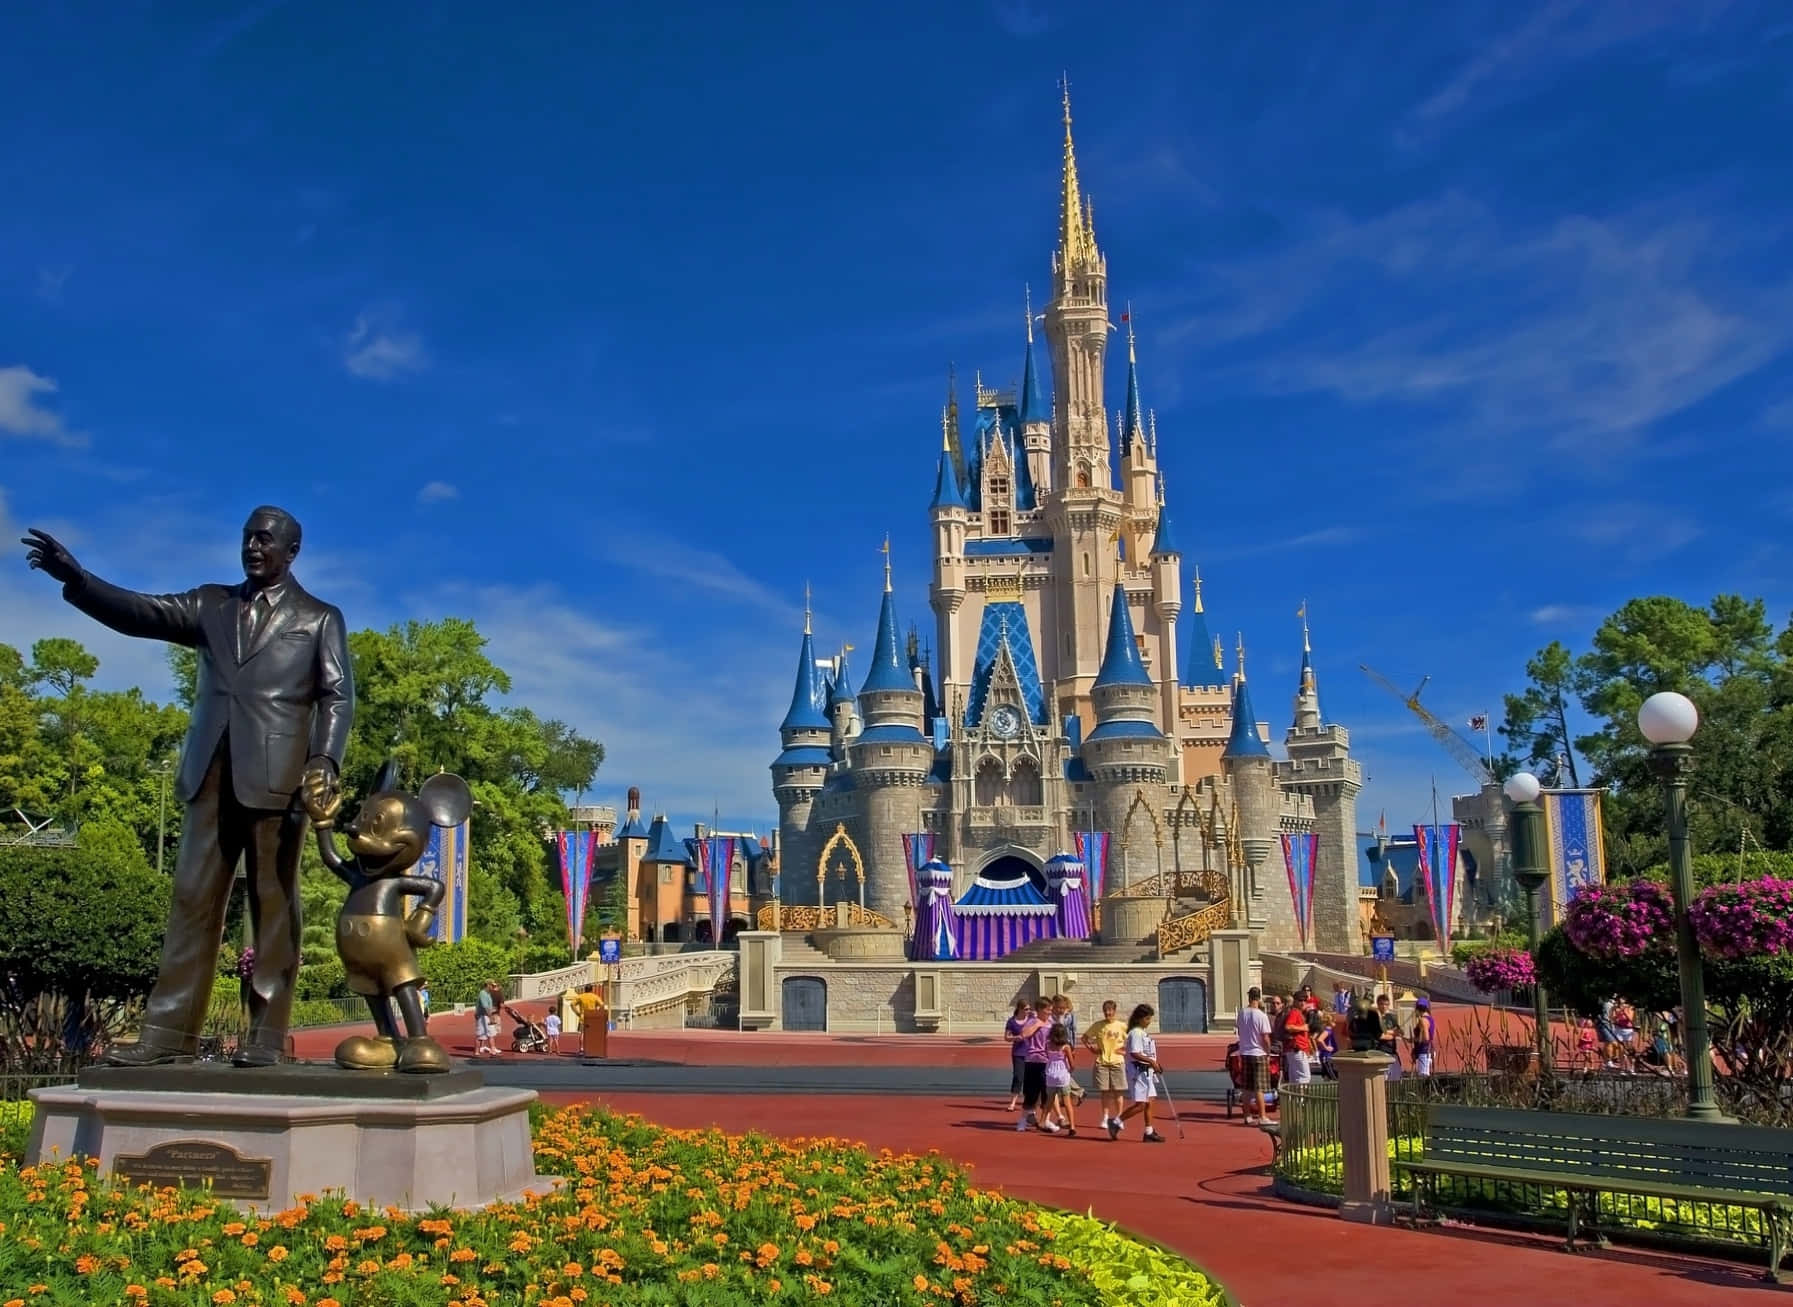 A Statue Of Cinderella And A Statue Of Walt Disney